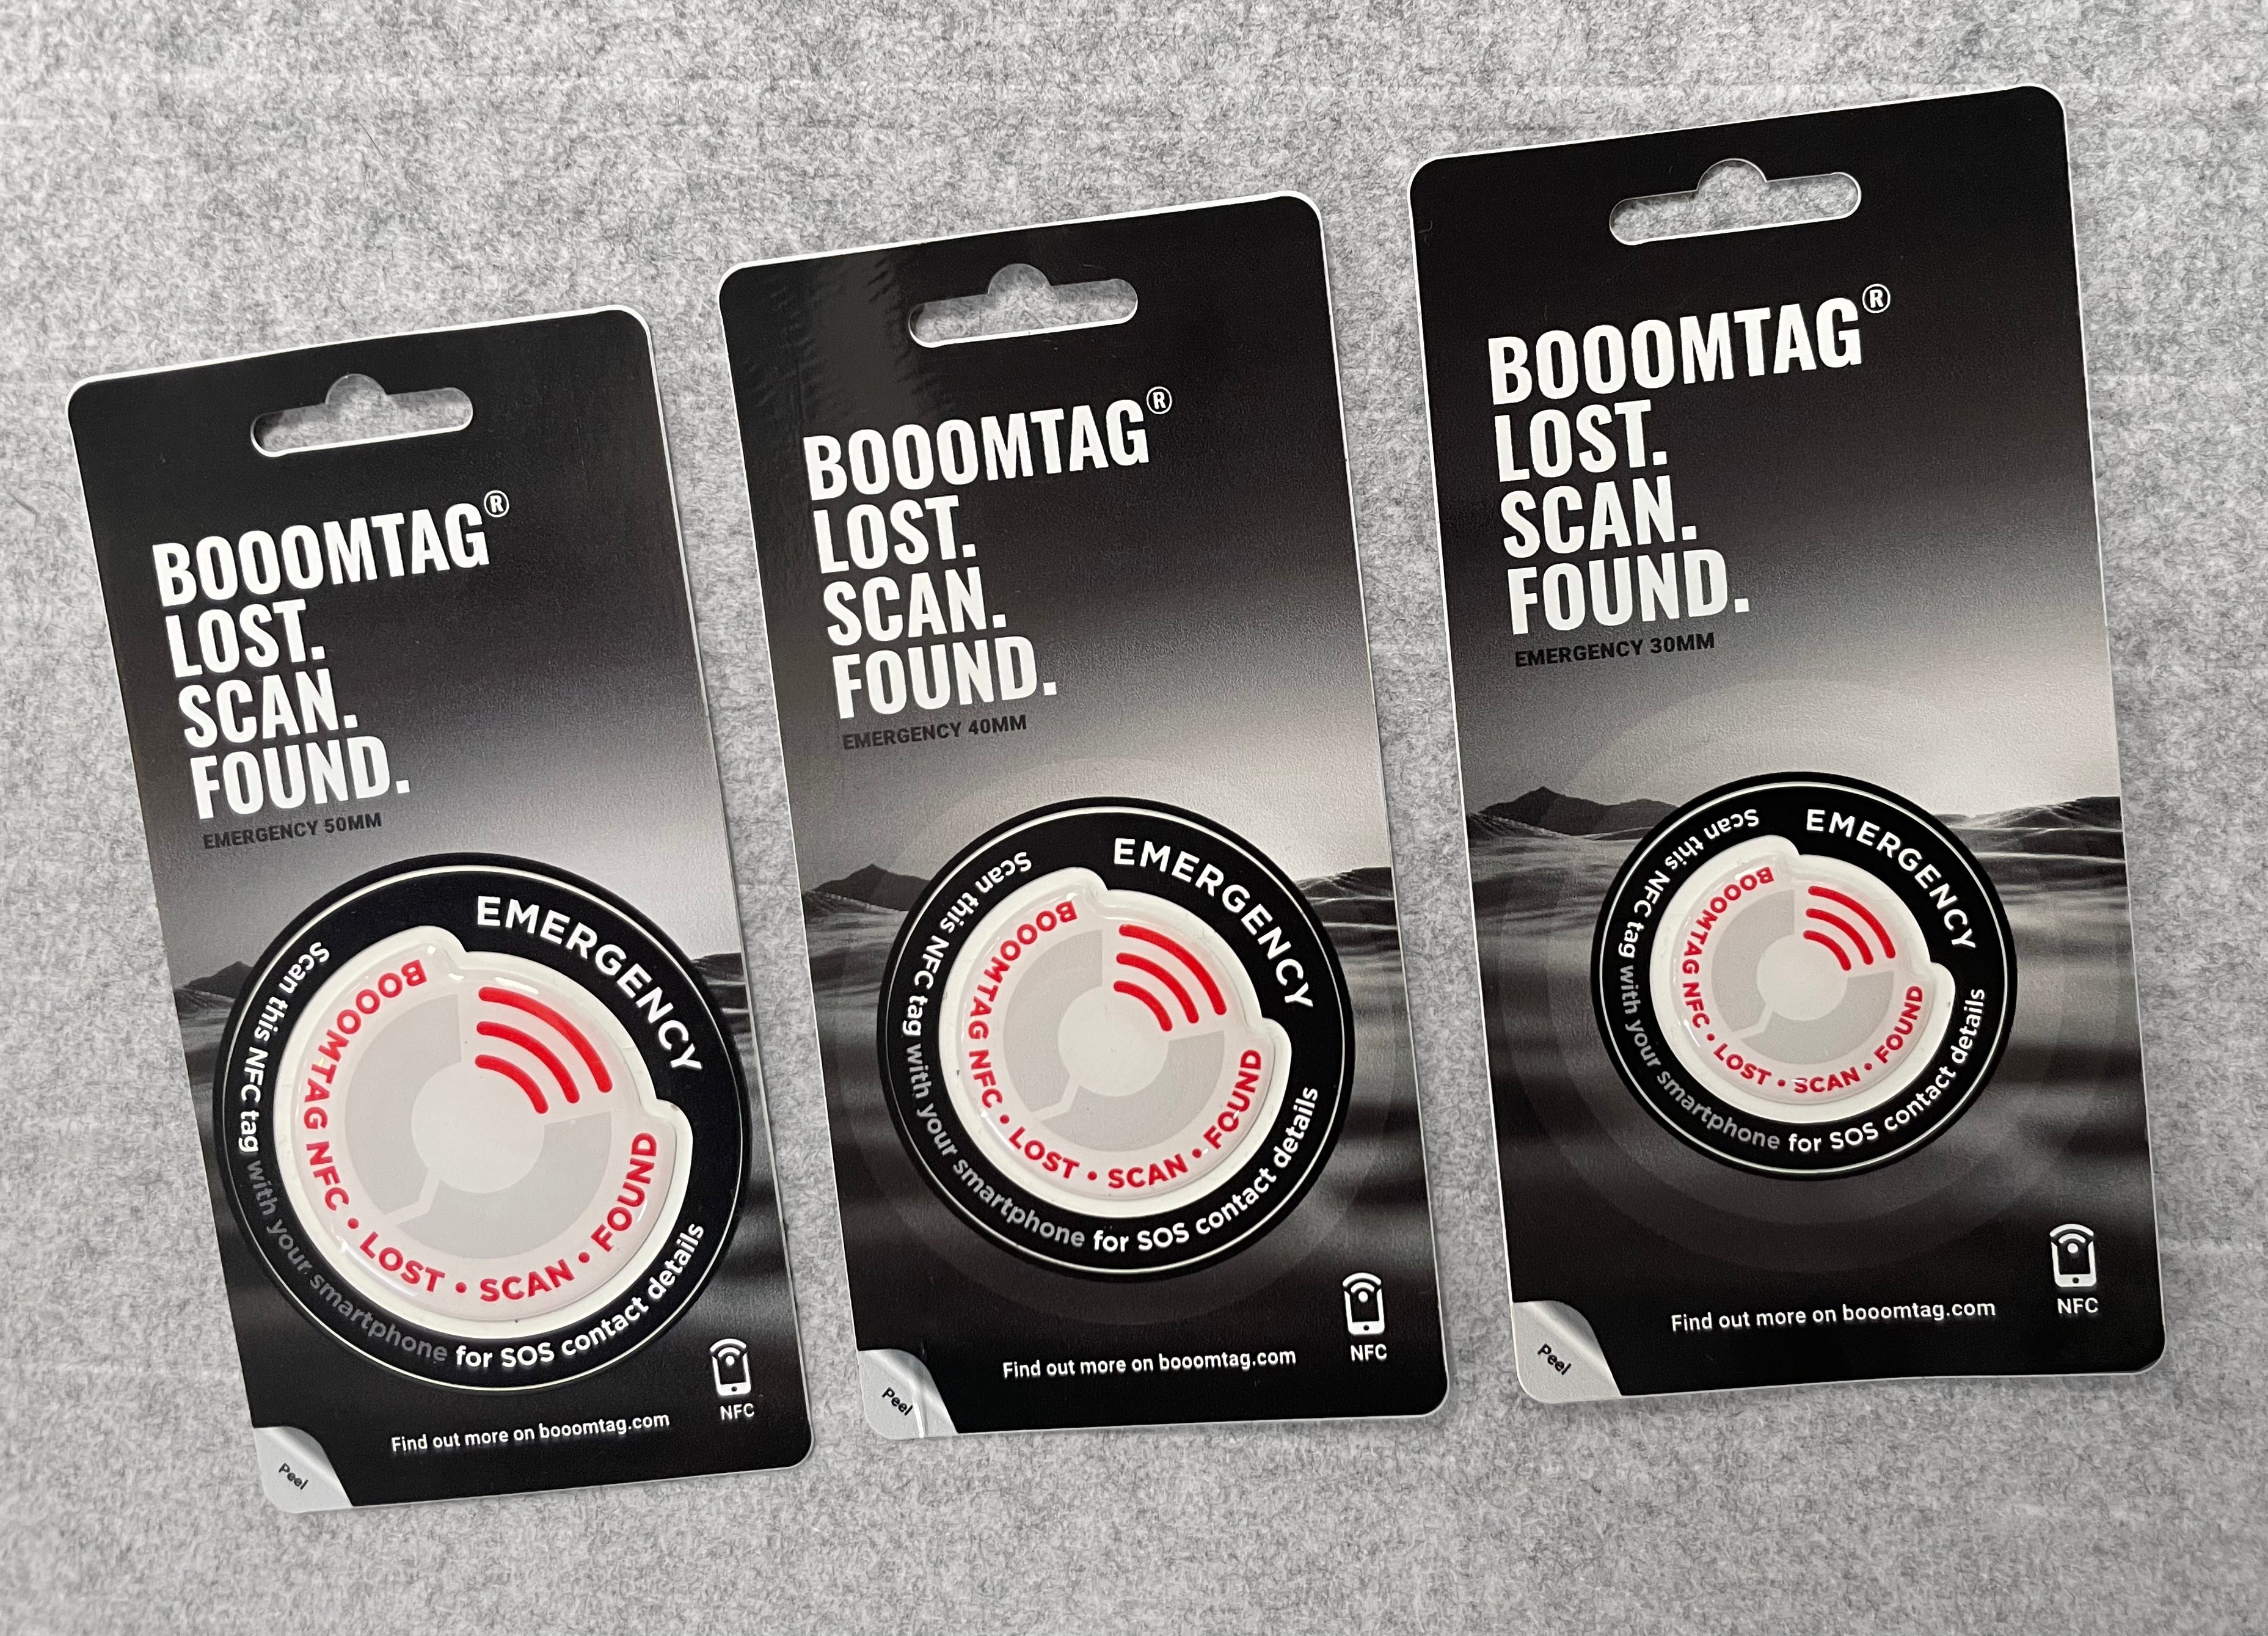 Booomtag® NFC Emergency